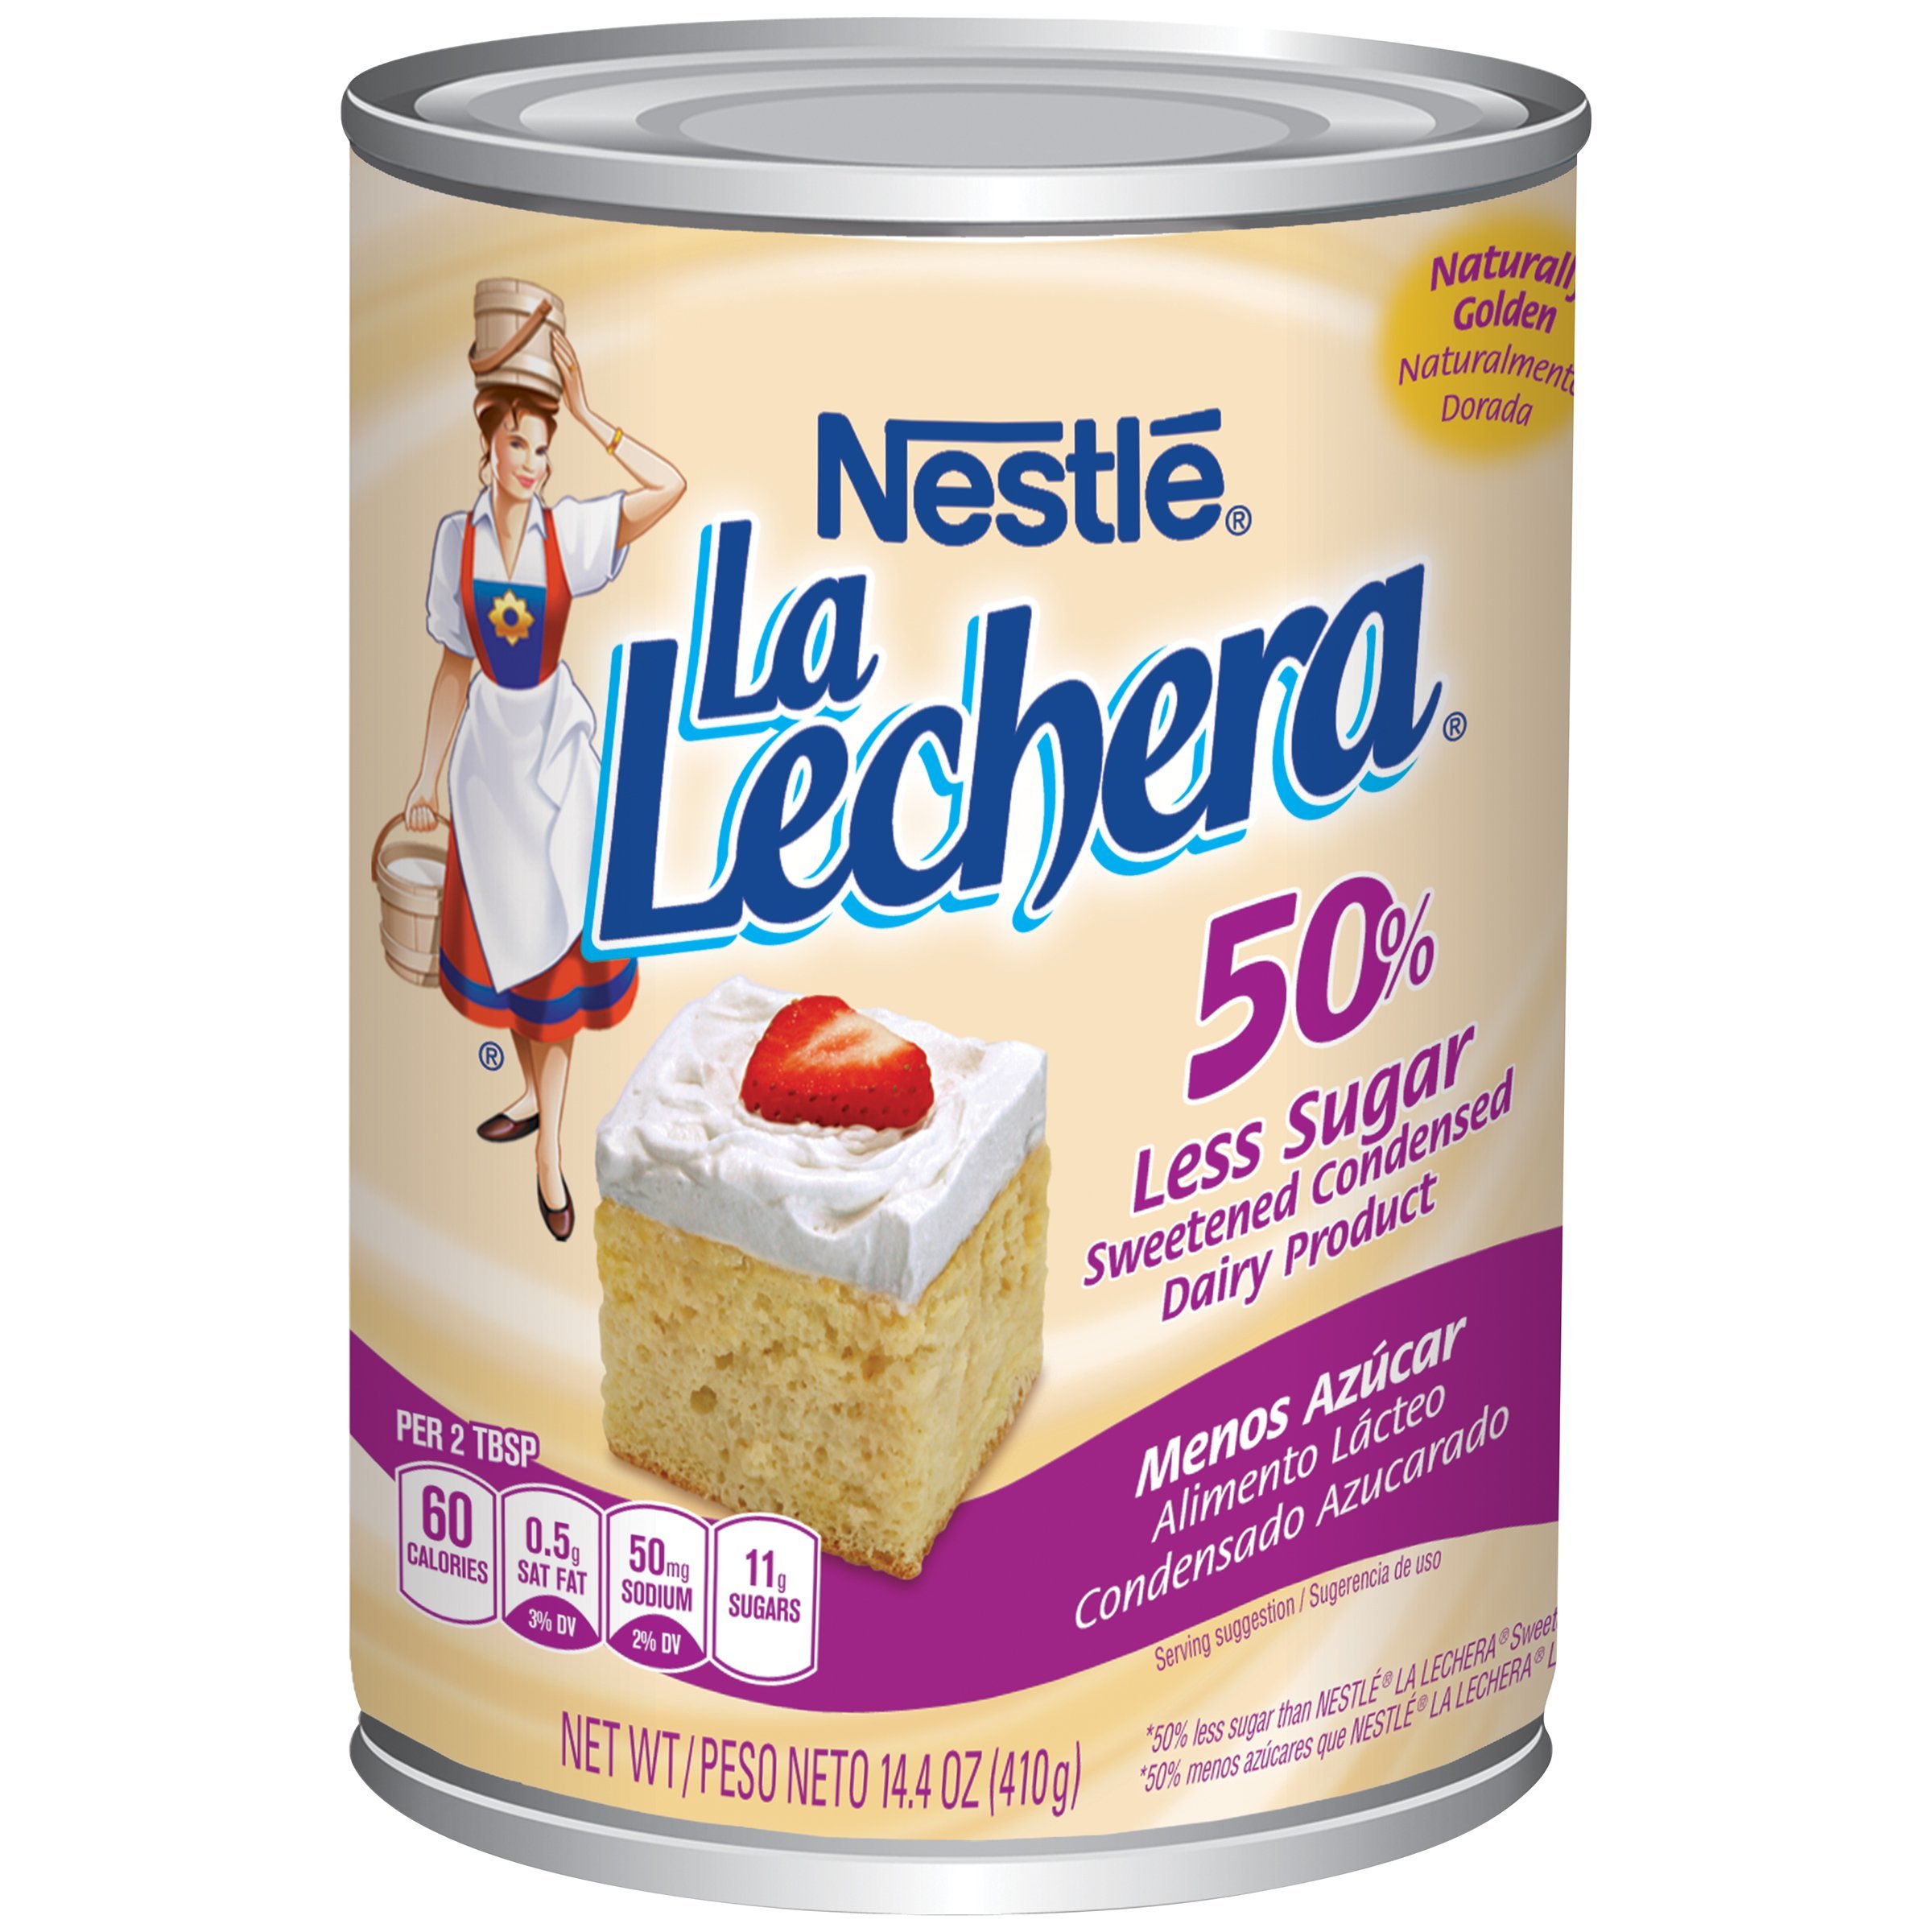 Nestle La Lechera Sweetened Condensed Milk with 50% Less Sugar